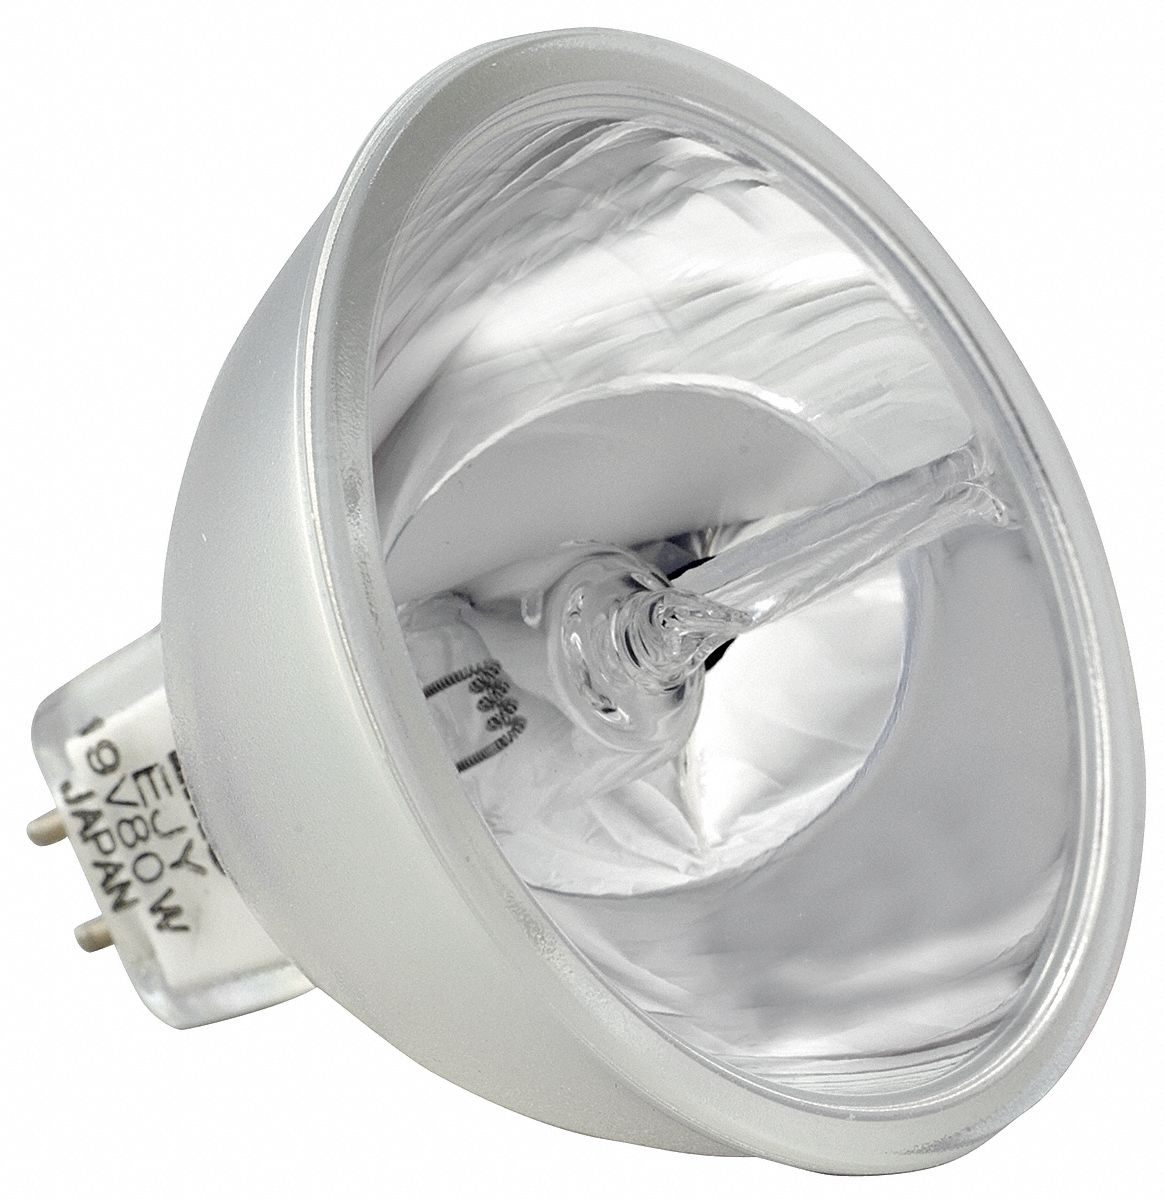 Halogen Reflector Bulb: MR16, 2-Pin (GX5.3), 250W HAL, 250 W Watts, 800 lm, 3,400 K Color Temp